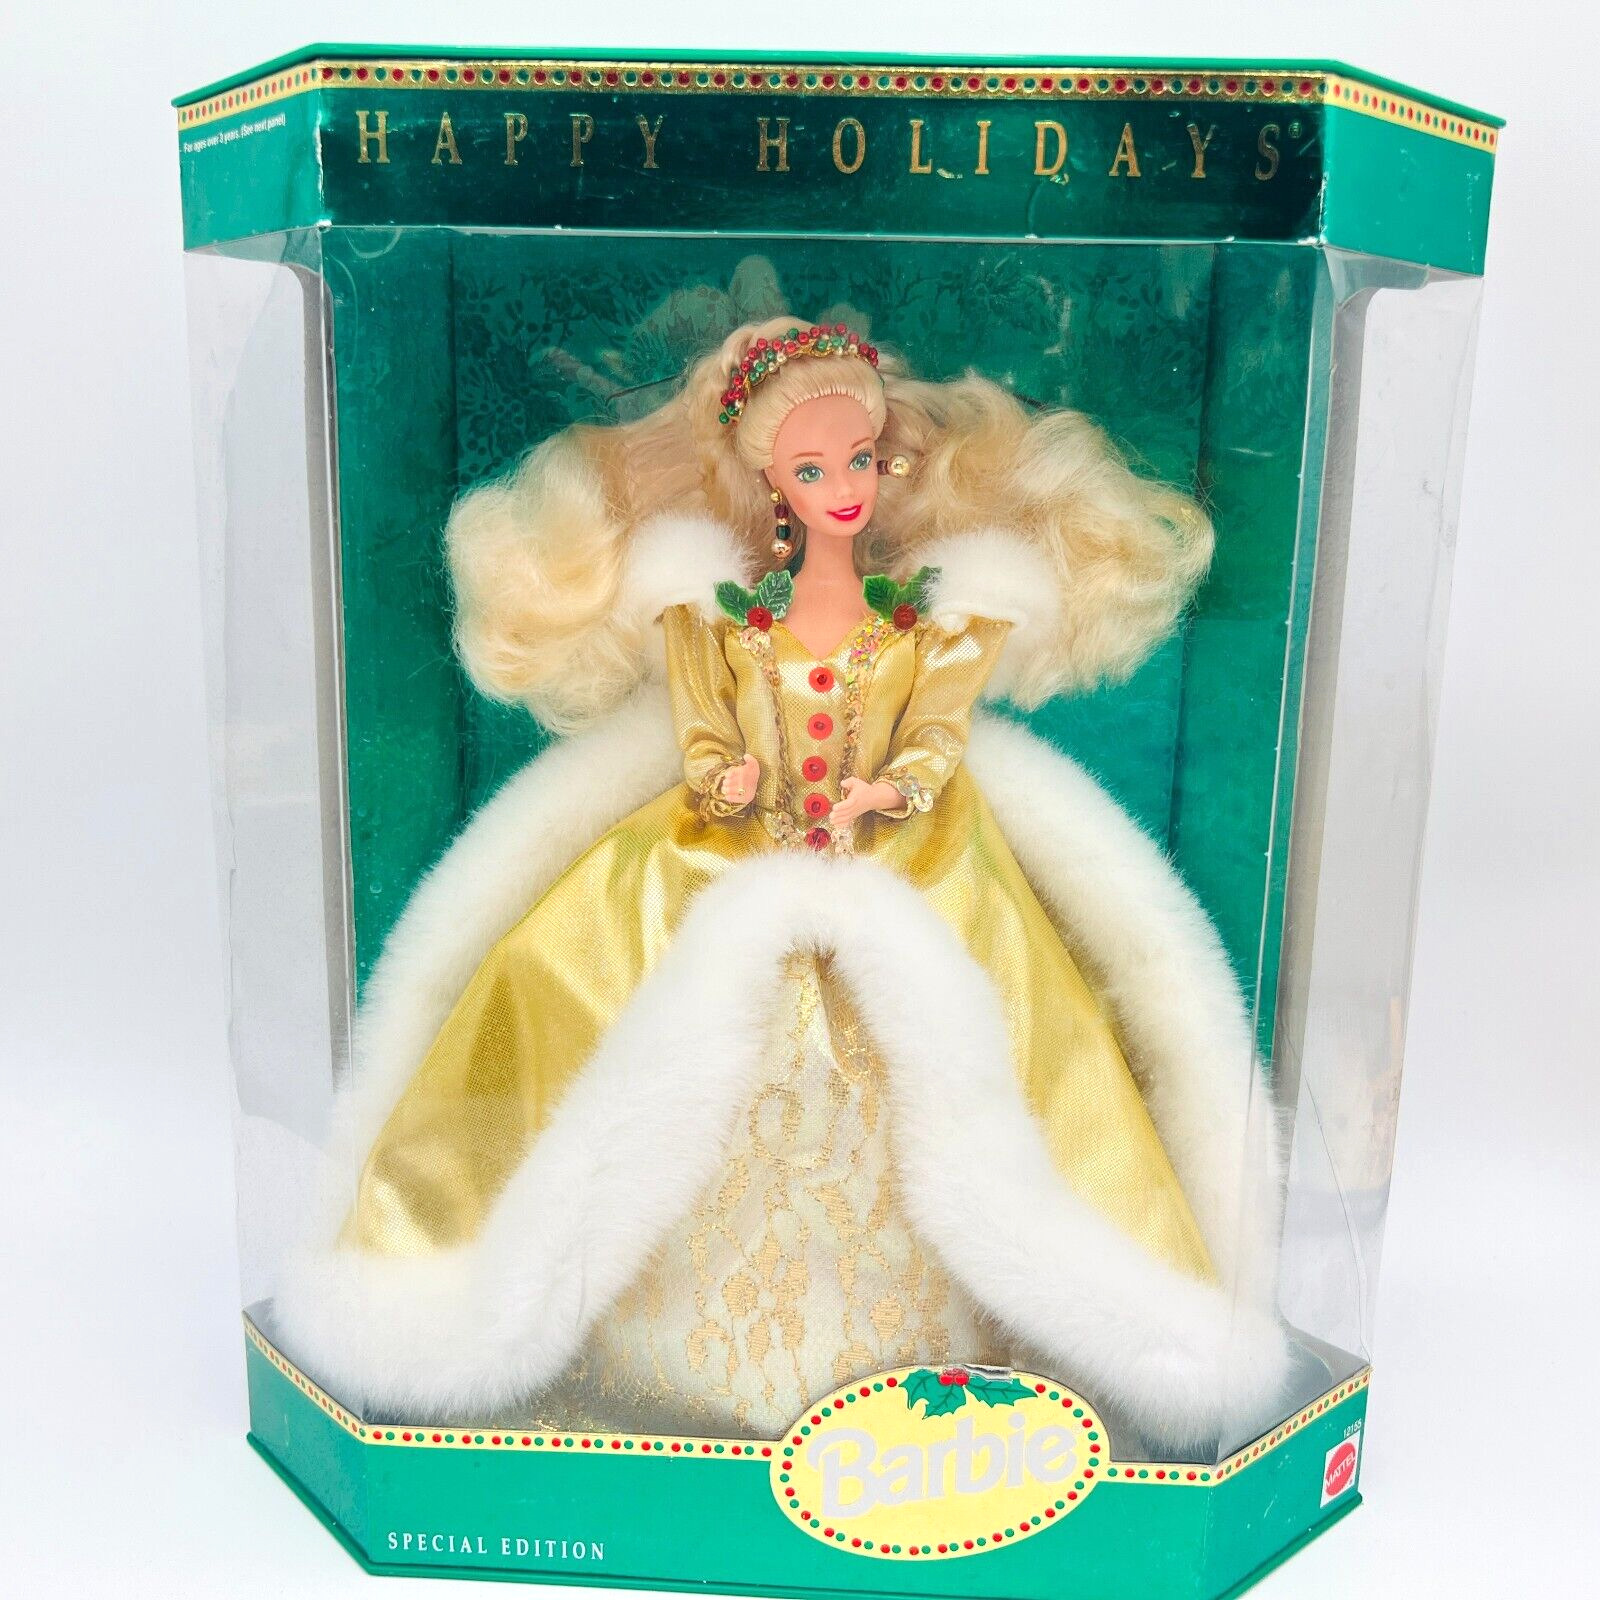 1994 Special Edition Barbie Doll Holidays Christmas Mattel - Box with Shelf Wear